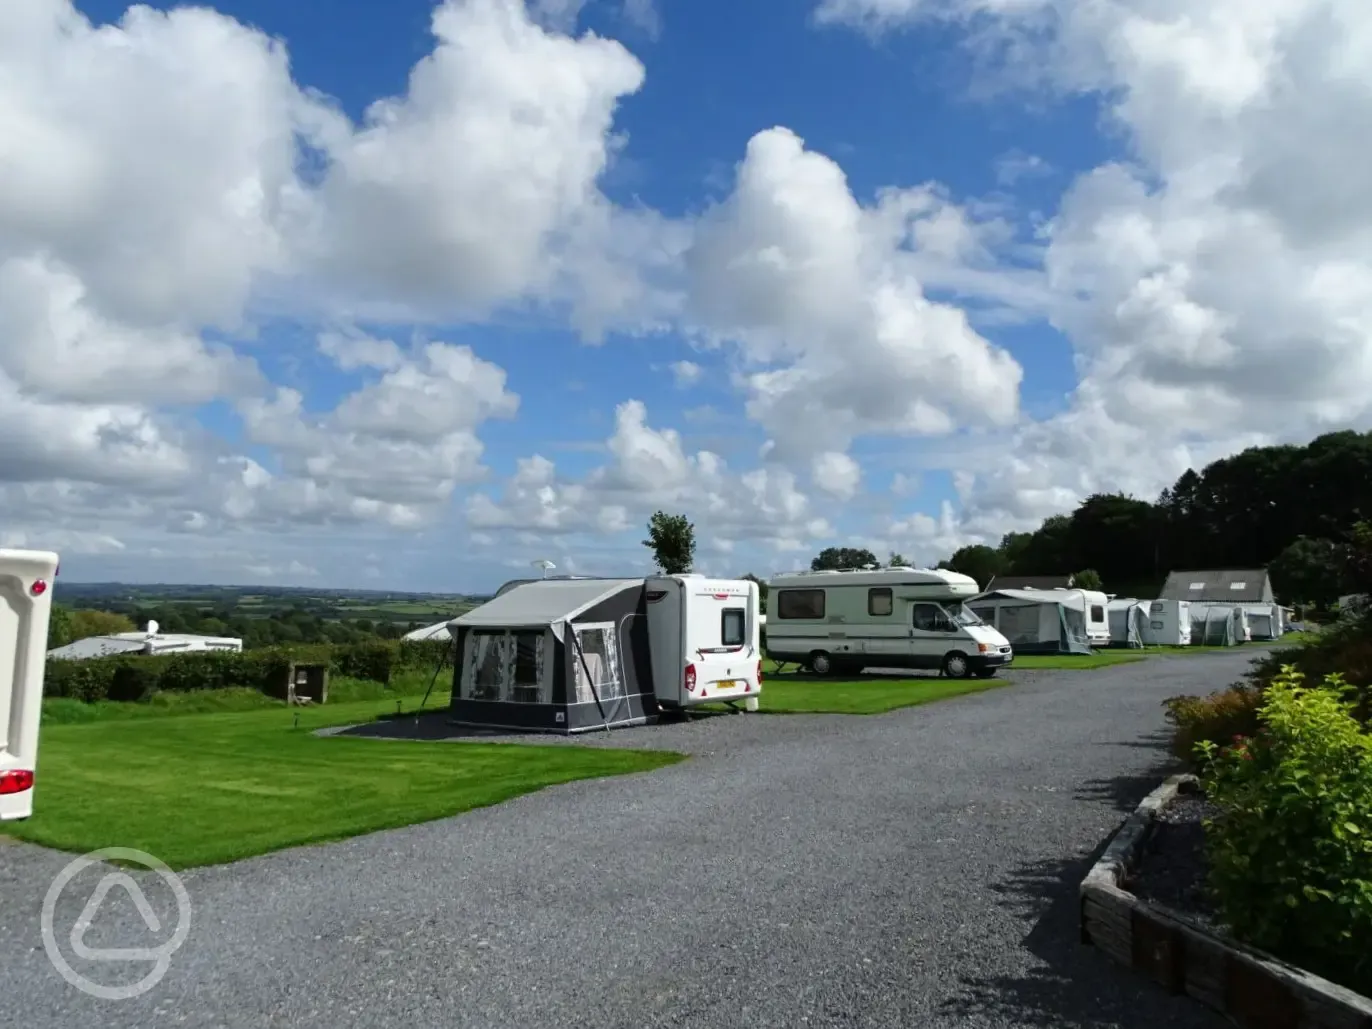 Caravans and trailer tents